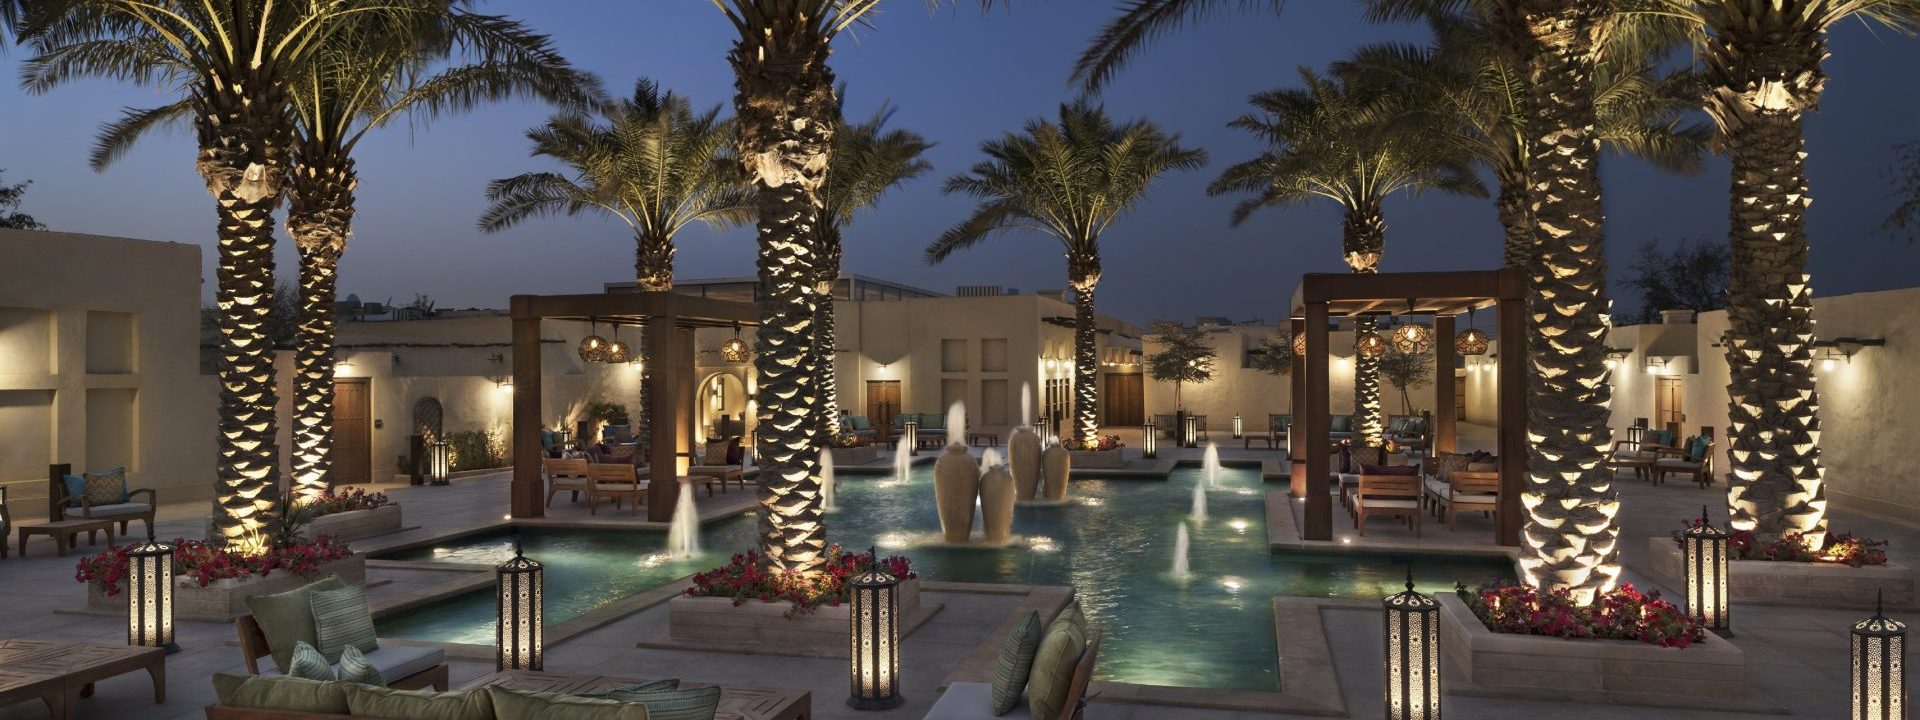 Luxury hotel Souq Al Wakra Hotel Qatar opens in up-and-coming neighborhood